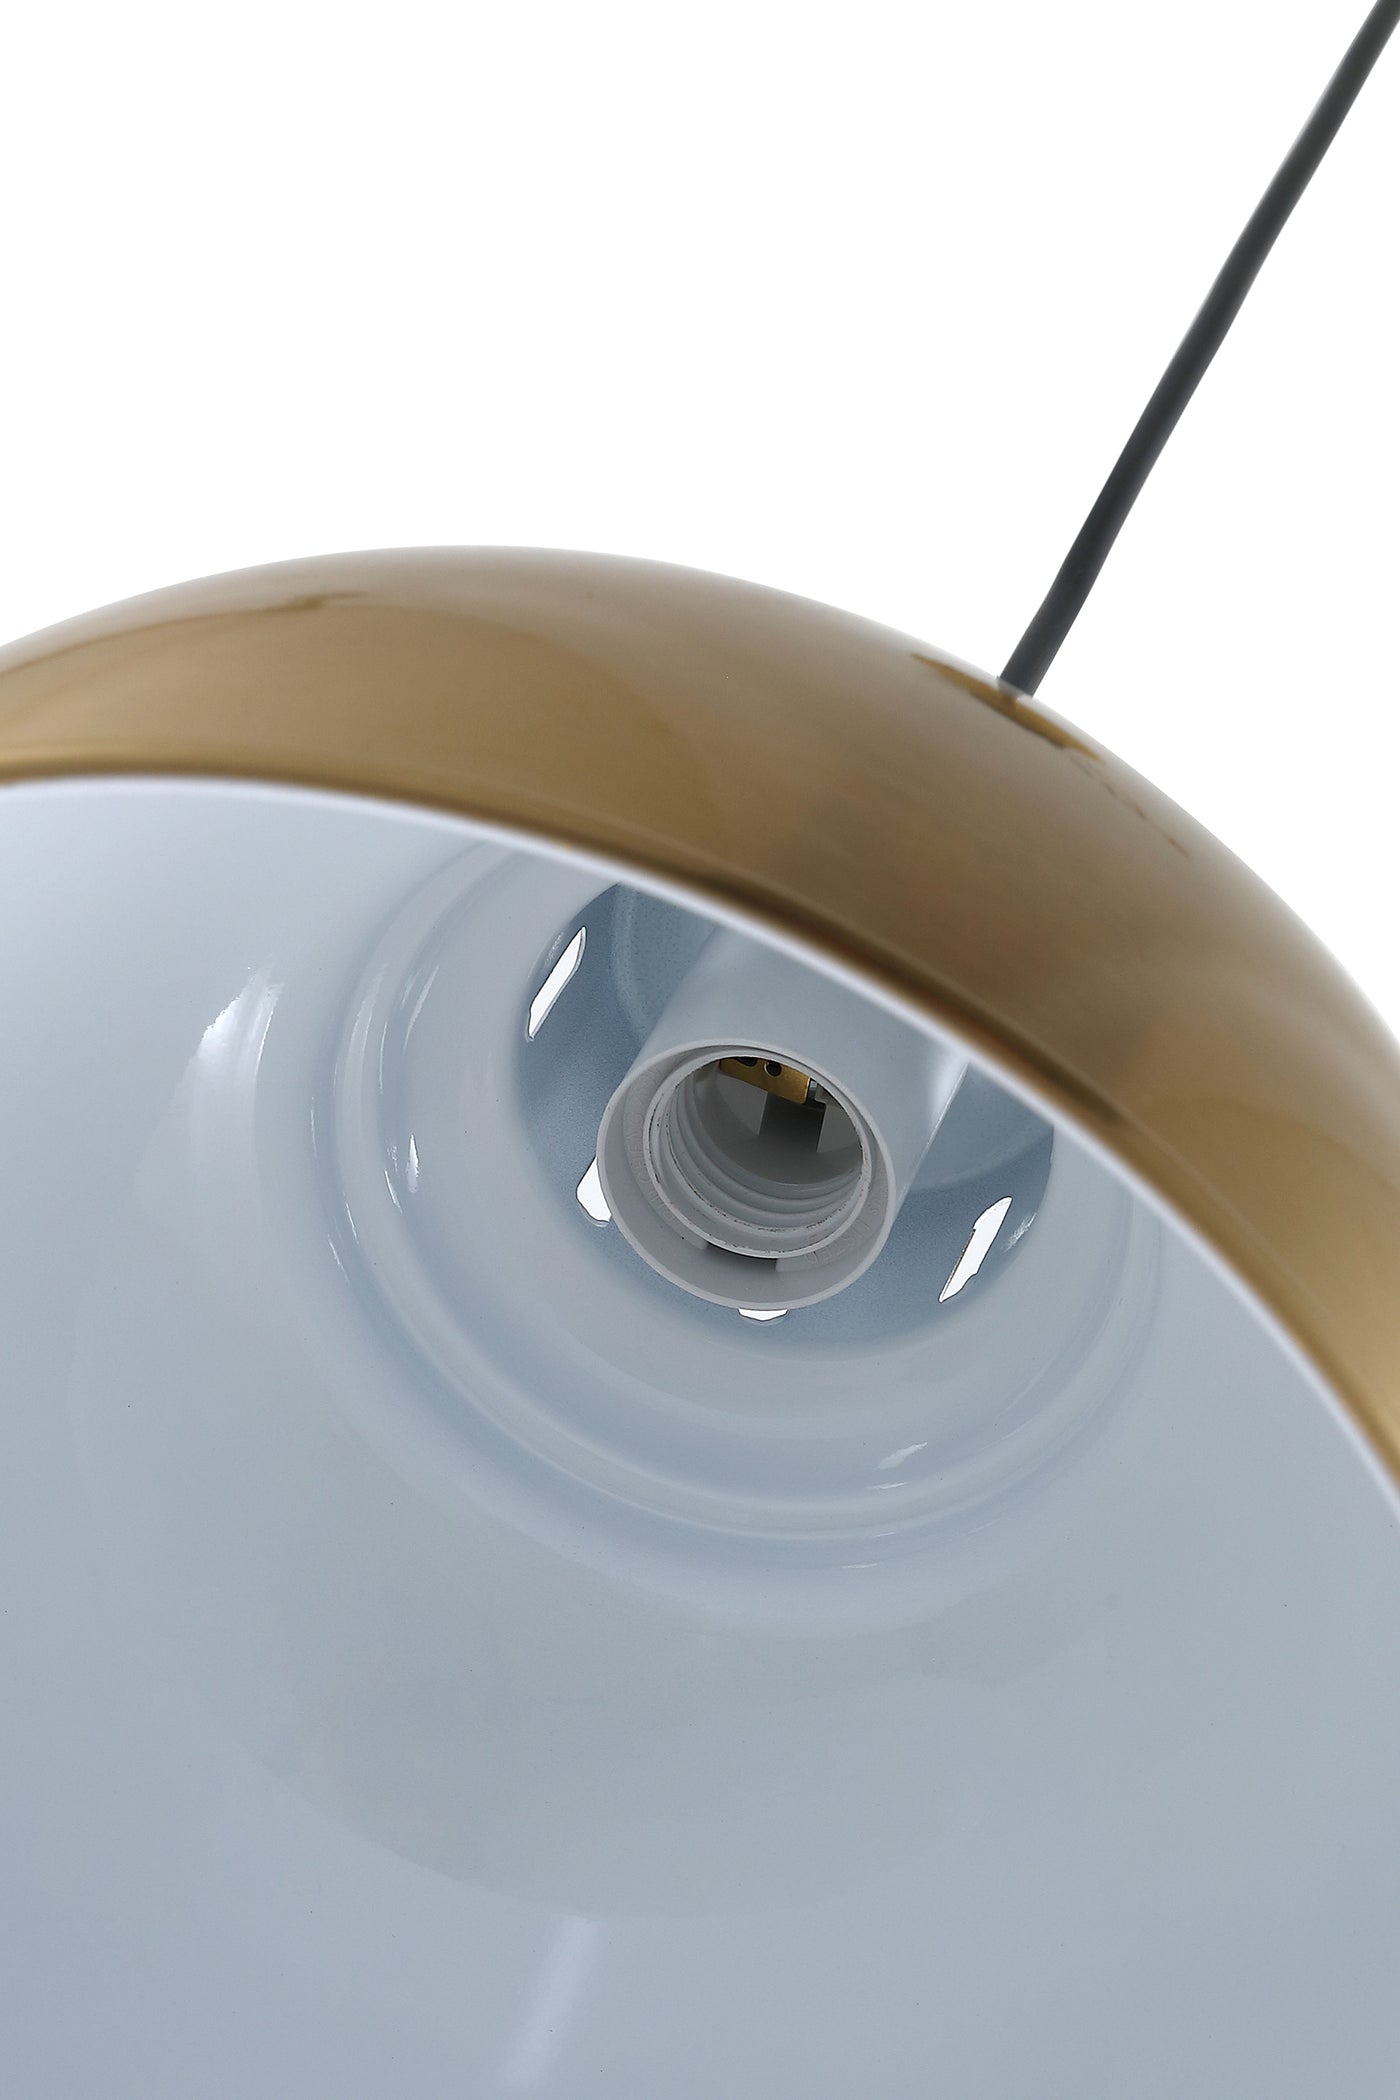 1-Light Single Dome Pendant Lighting